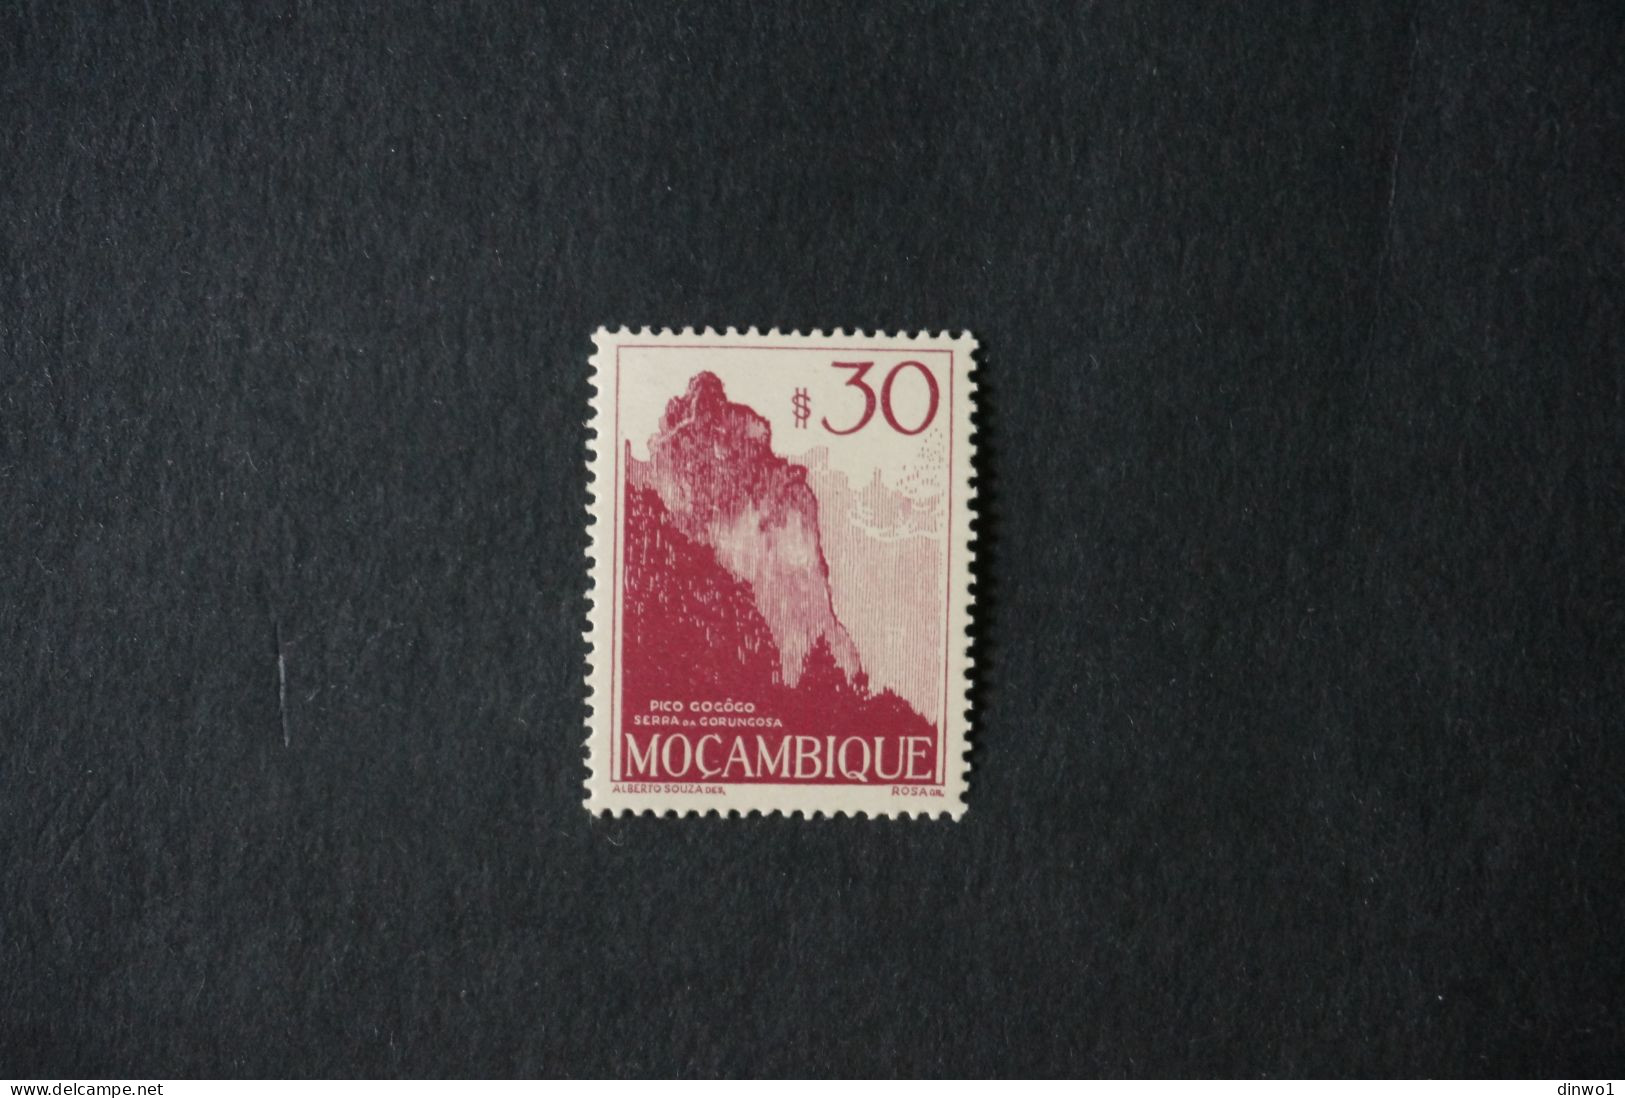 (T3) Mozambique - 1948 Local Views $30 - MNH - Mozambique